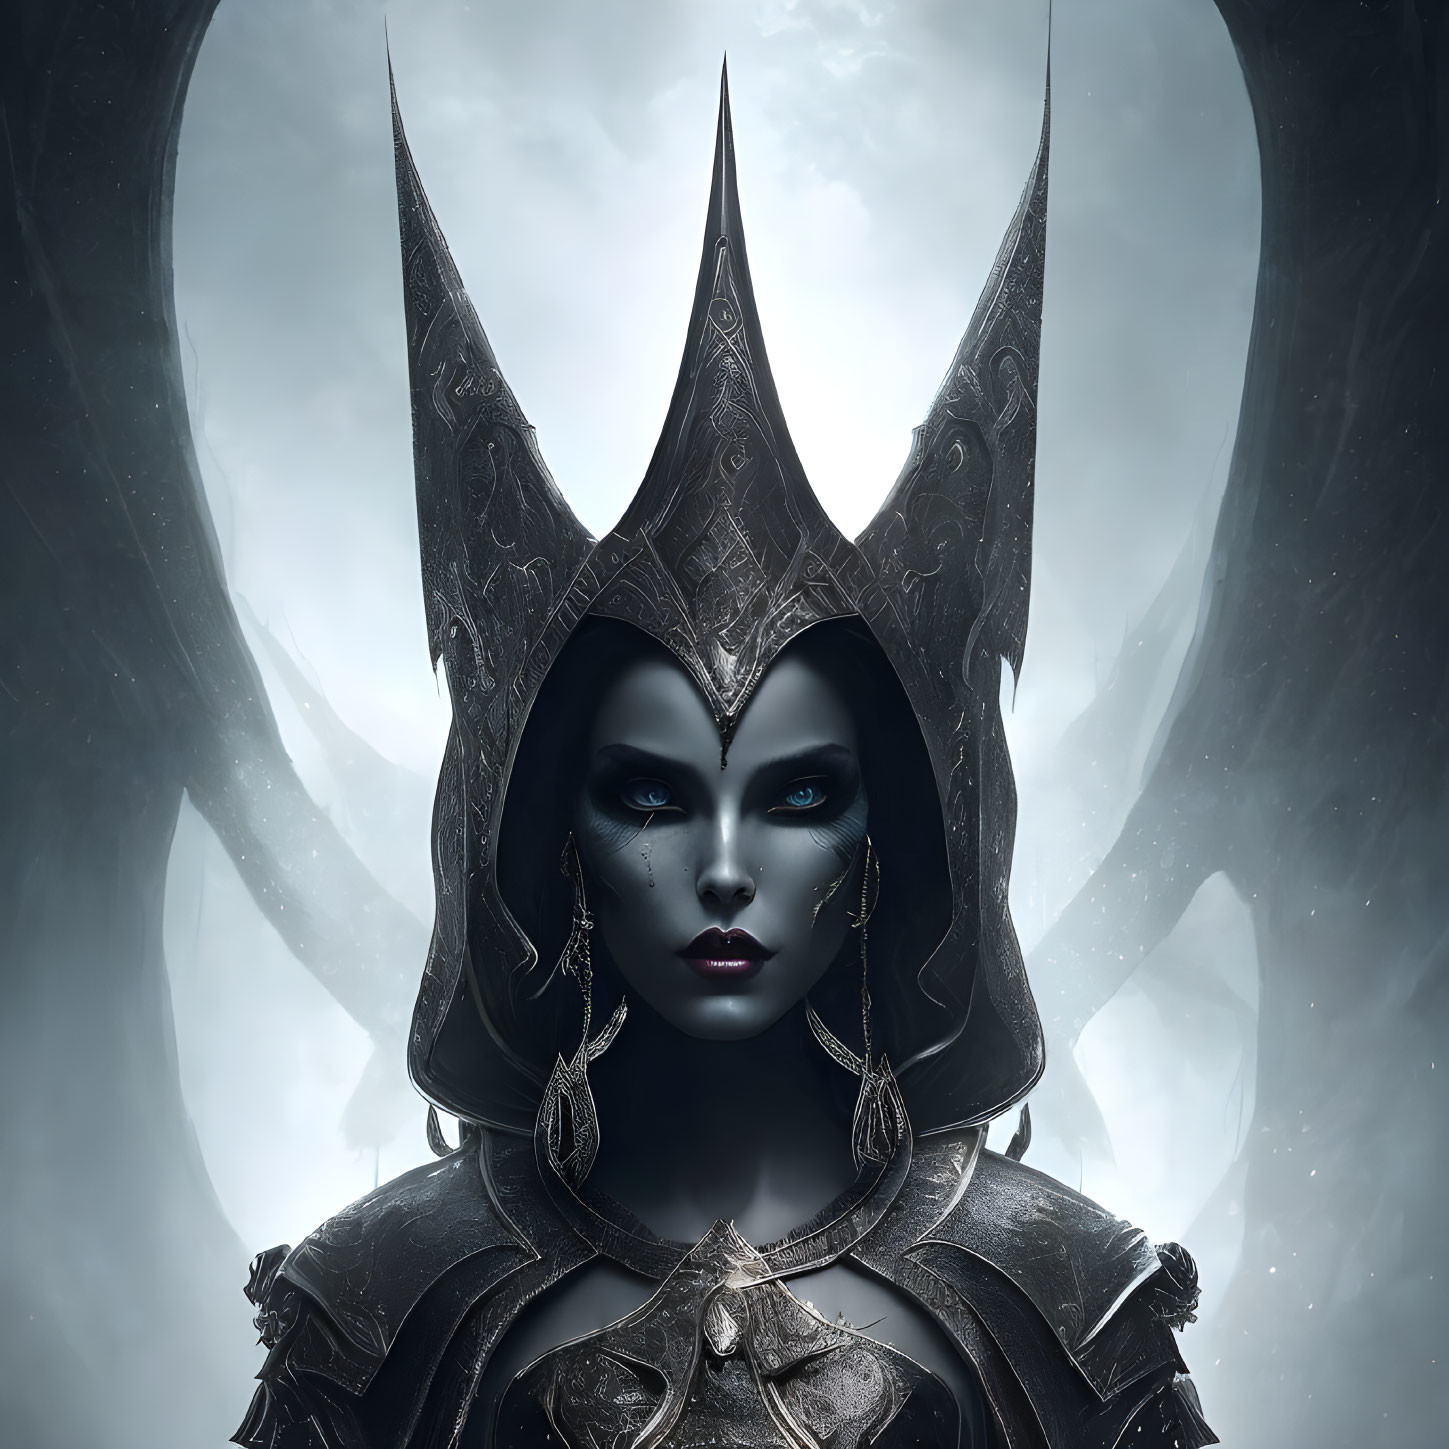 Blue-skinned female figure in dark armor with ornate headdress and piercing eyes.